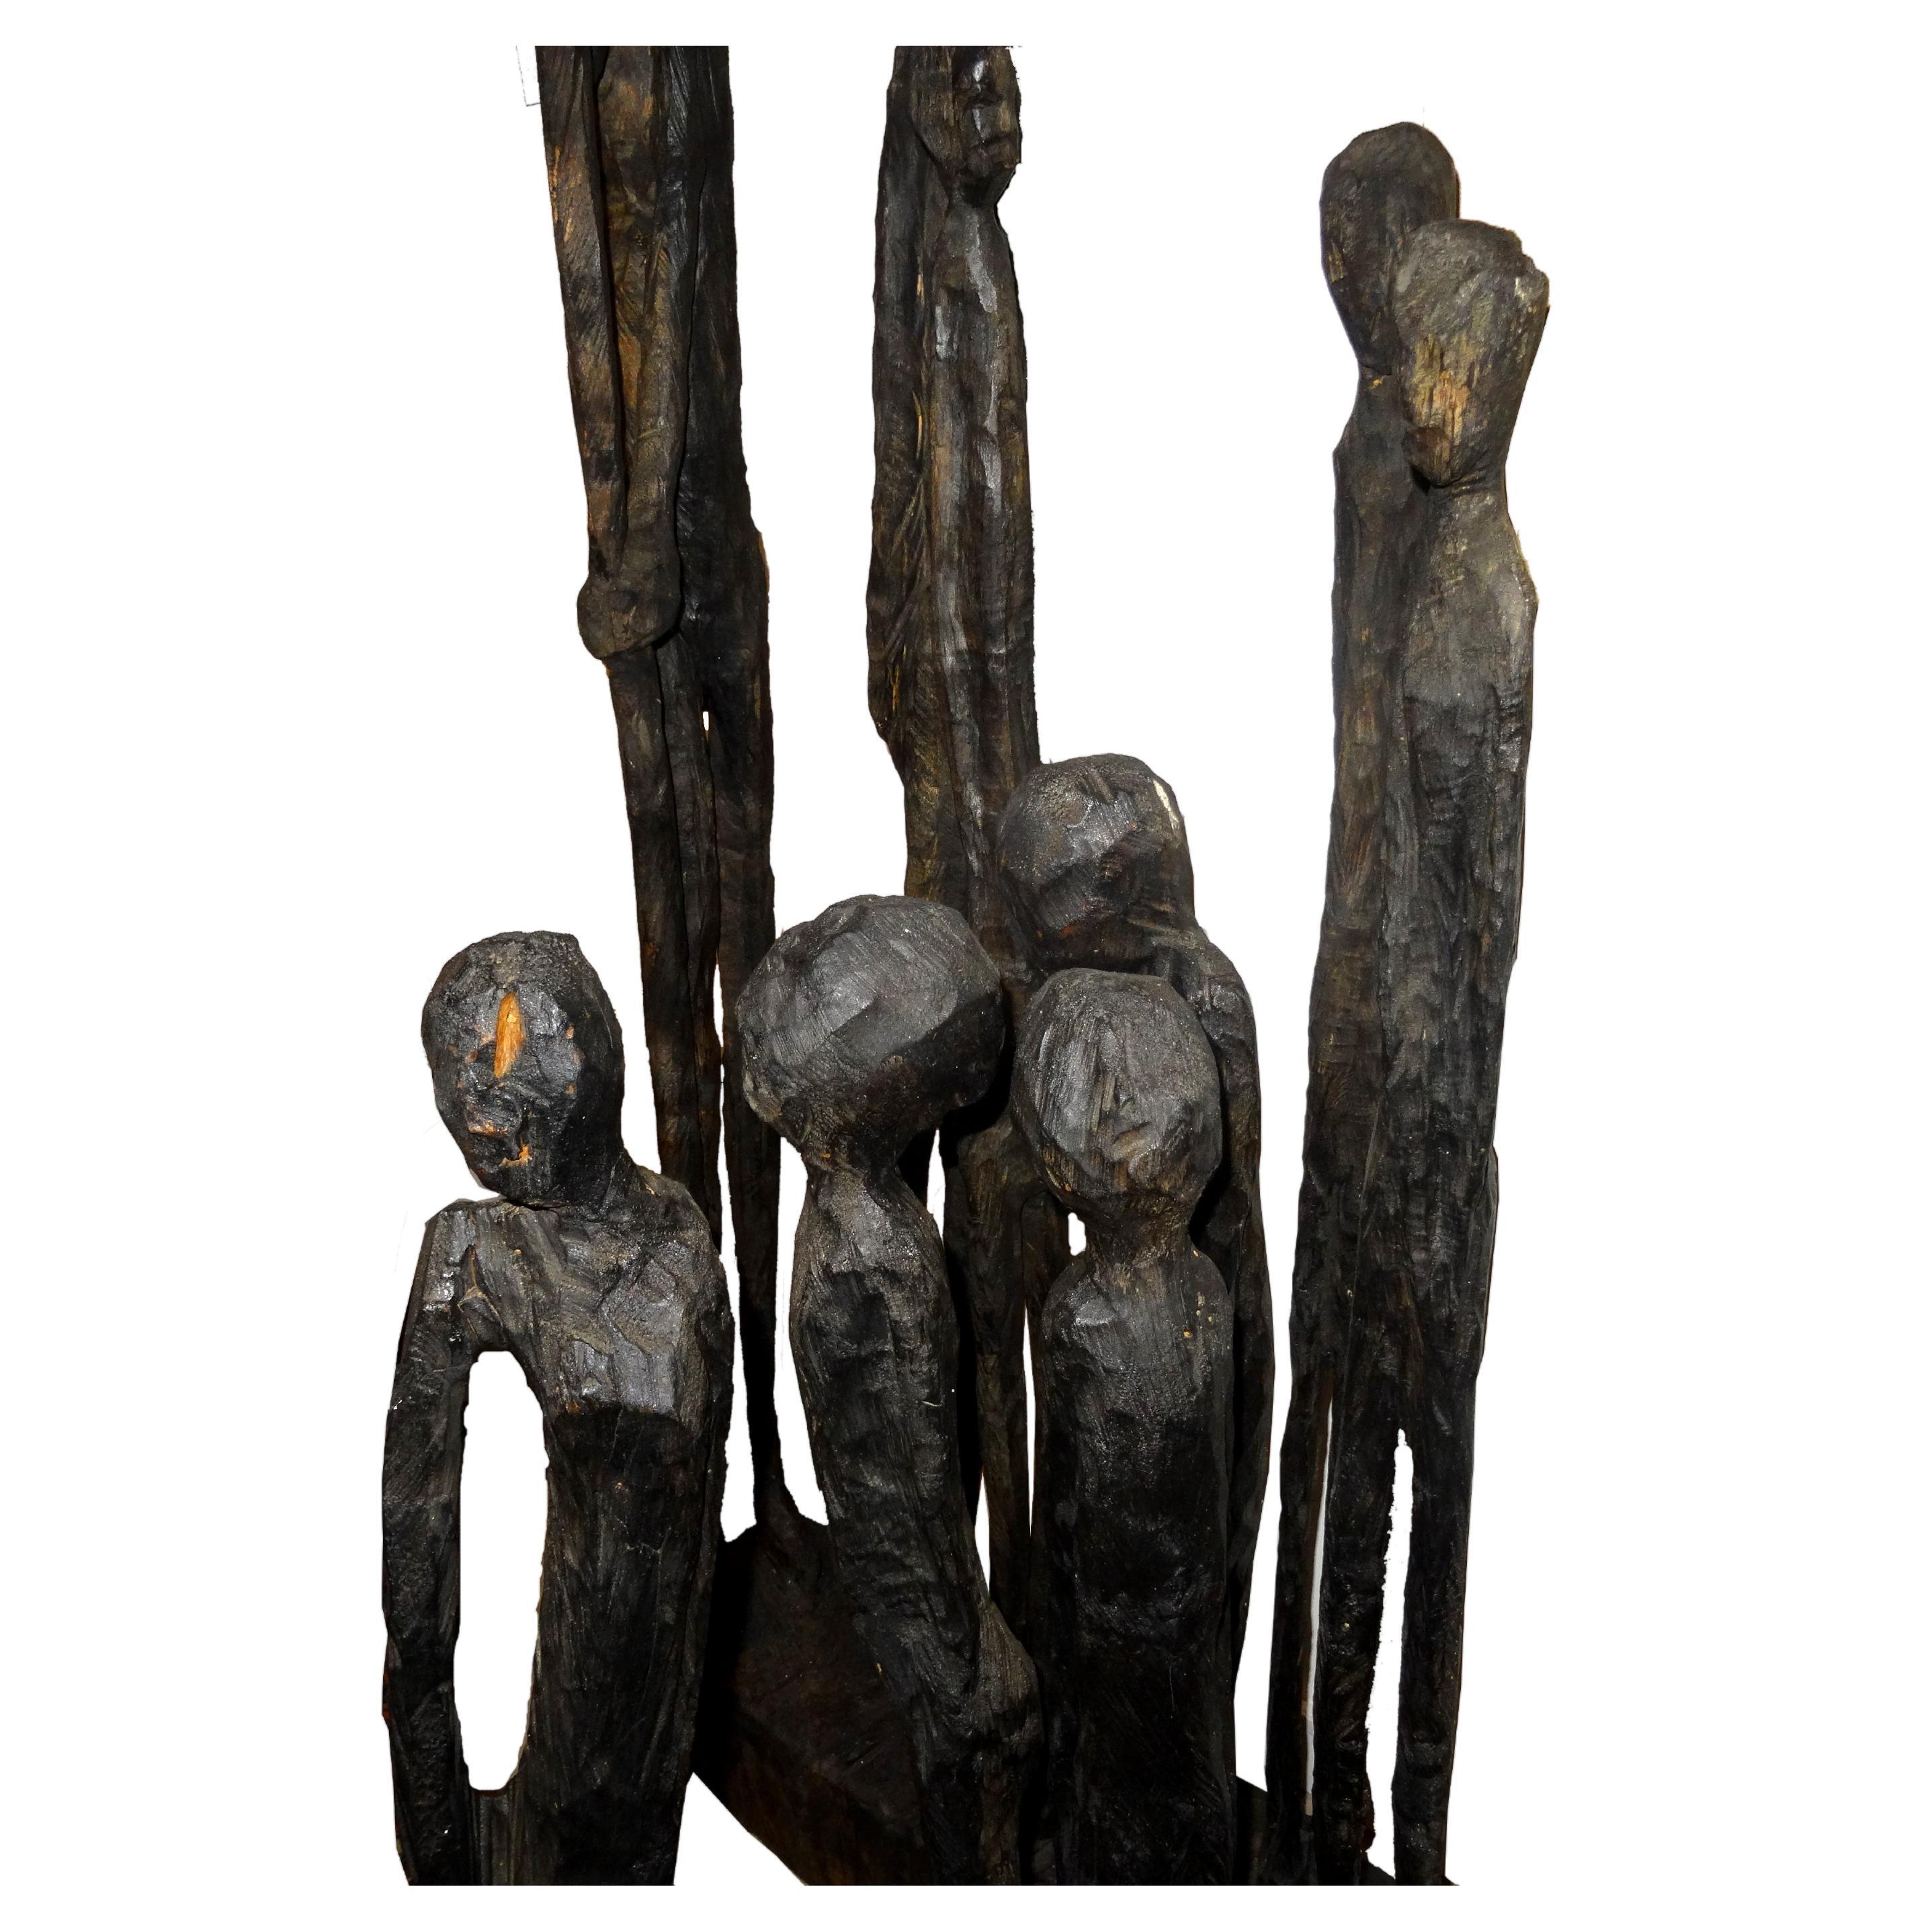 Jems Robert Koko Bi - wooden sculpture